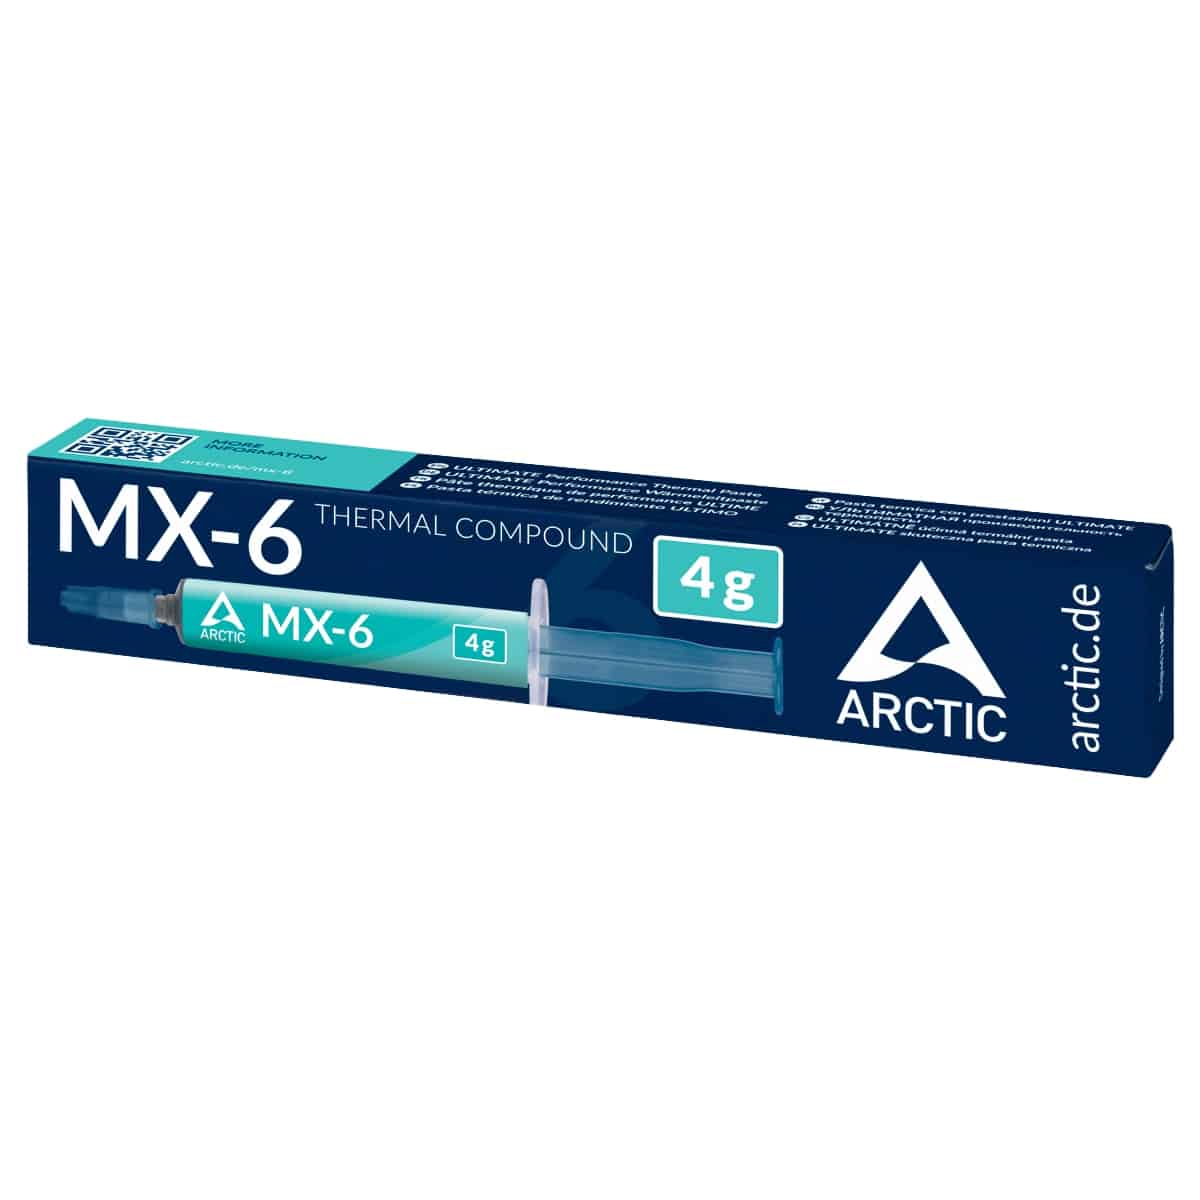 ARCTIC Wärmeleitpaste MX-6